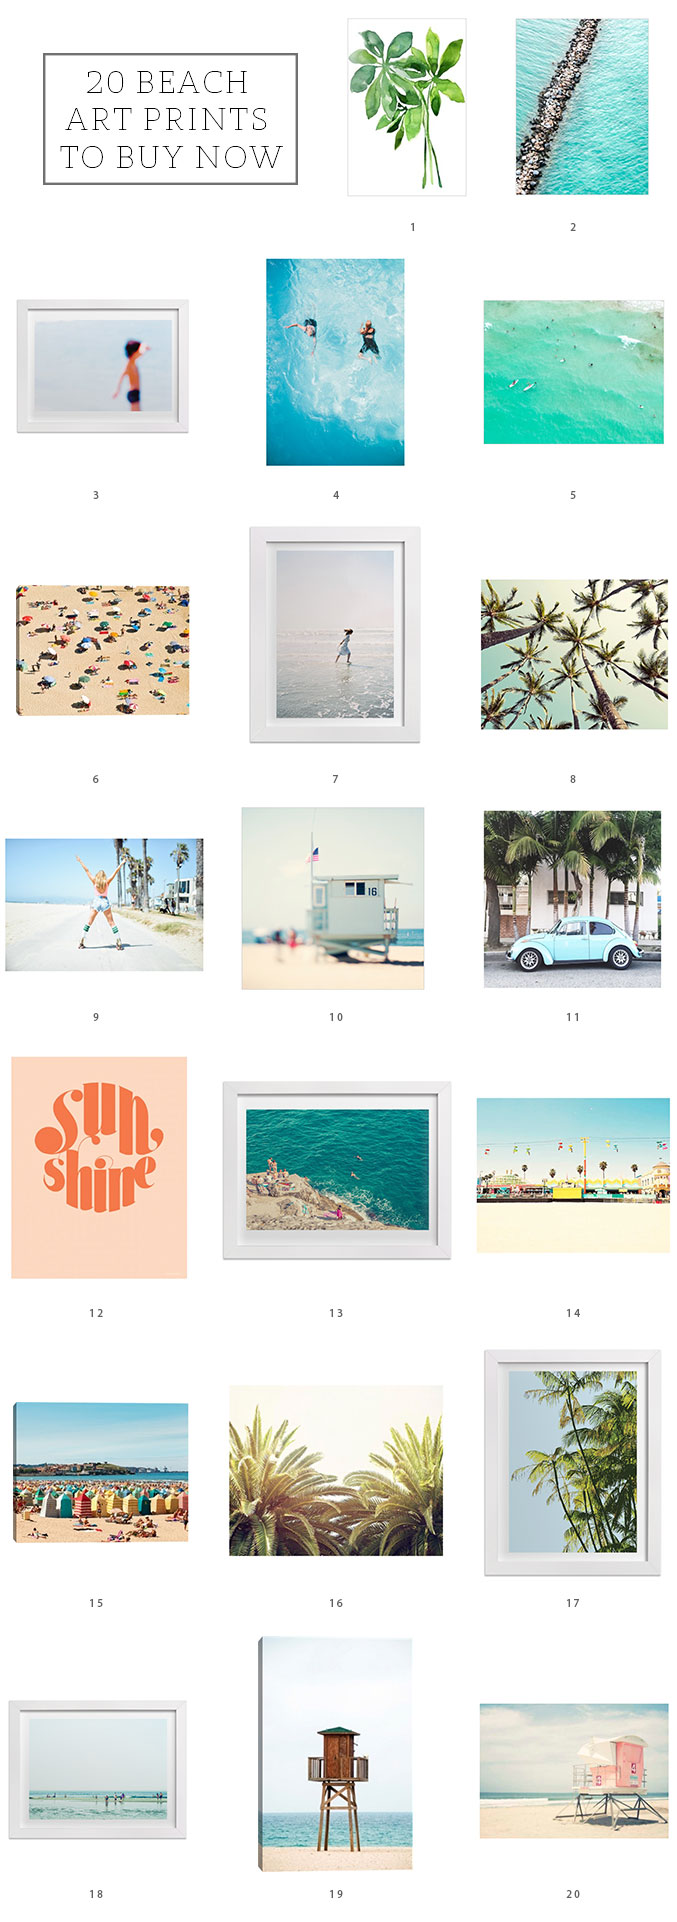 http://www.dreamgreendiy.com/wp-content/uploads/2016/06/26-34850-post/20-Beach-Art-Prints-To-Buy-Now.jpg